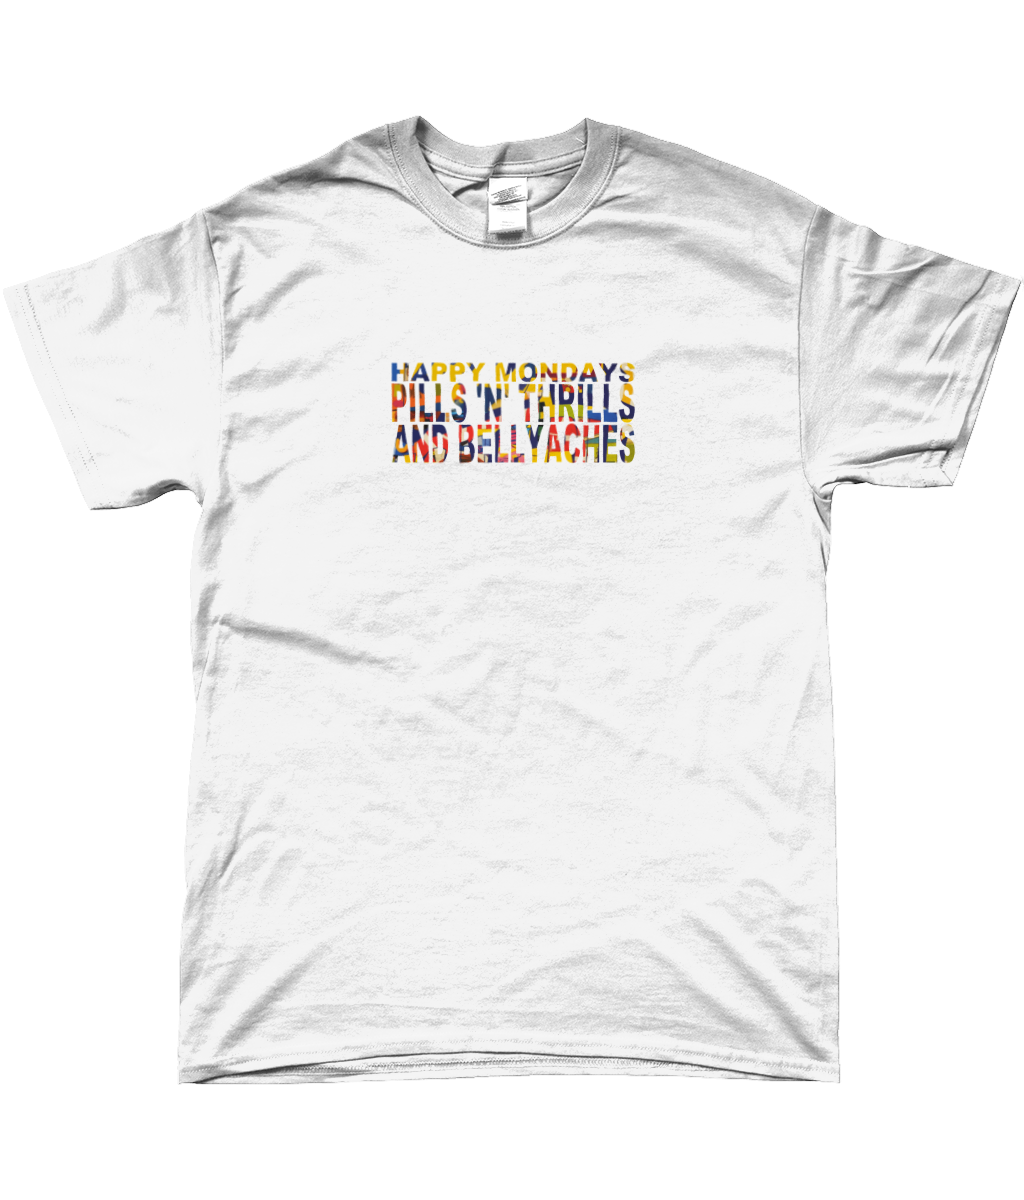 Happy Mondays Pills ’n’ Thrills and Bellyaches t-shirt